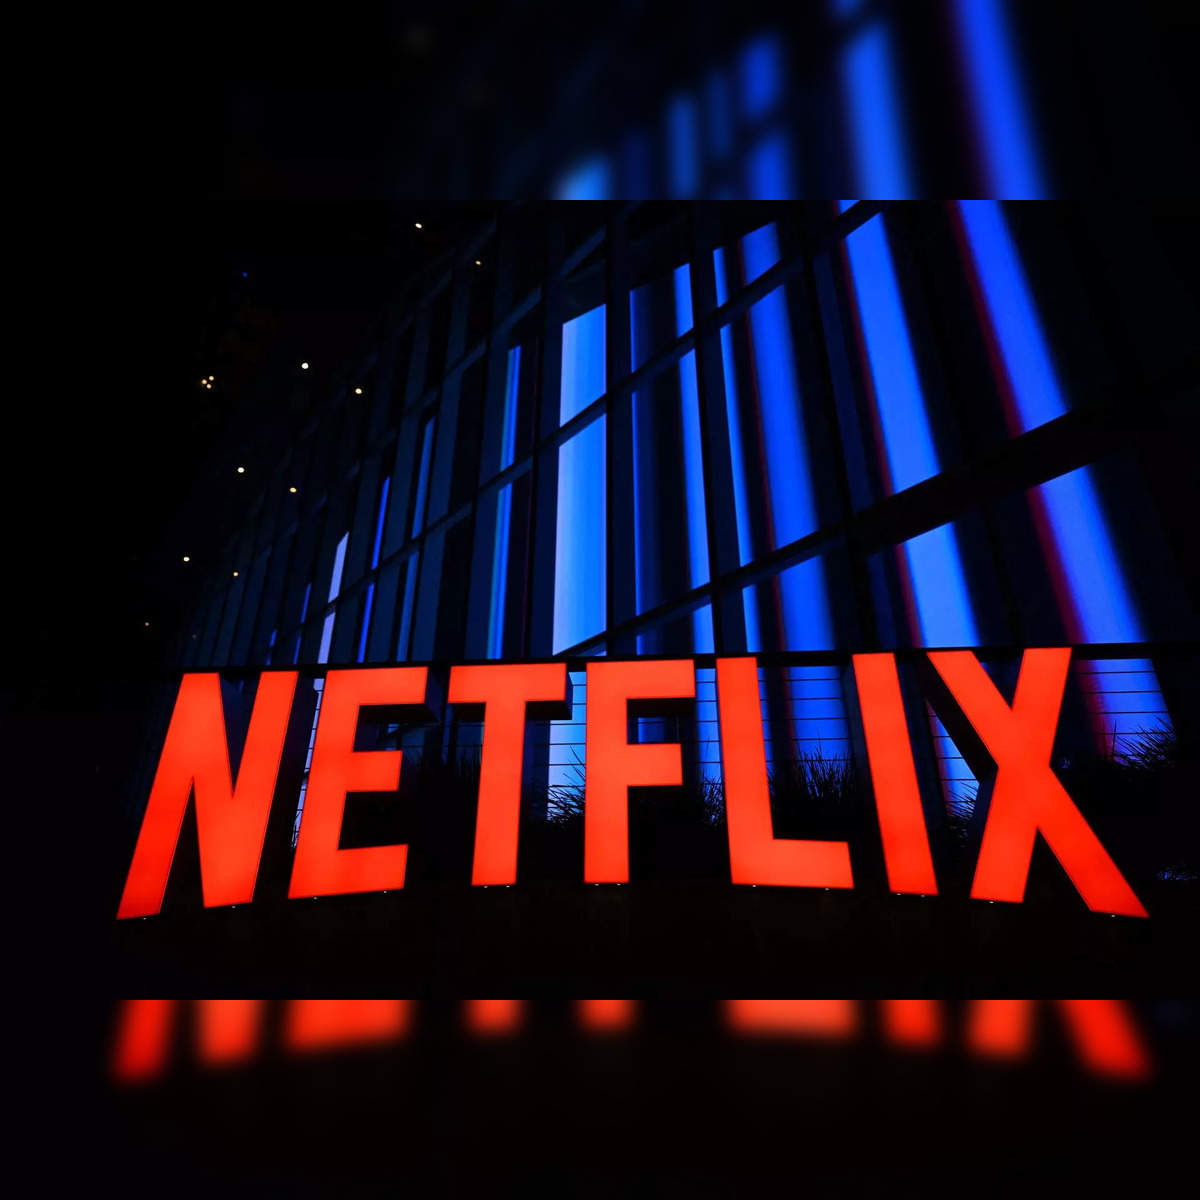 Squid Game' Season 2 Confirmed - Netflix Tudum